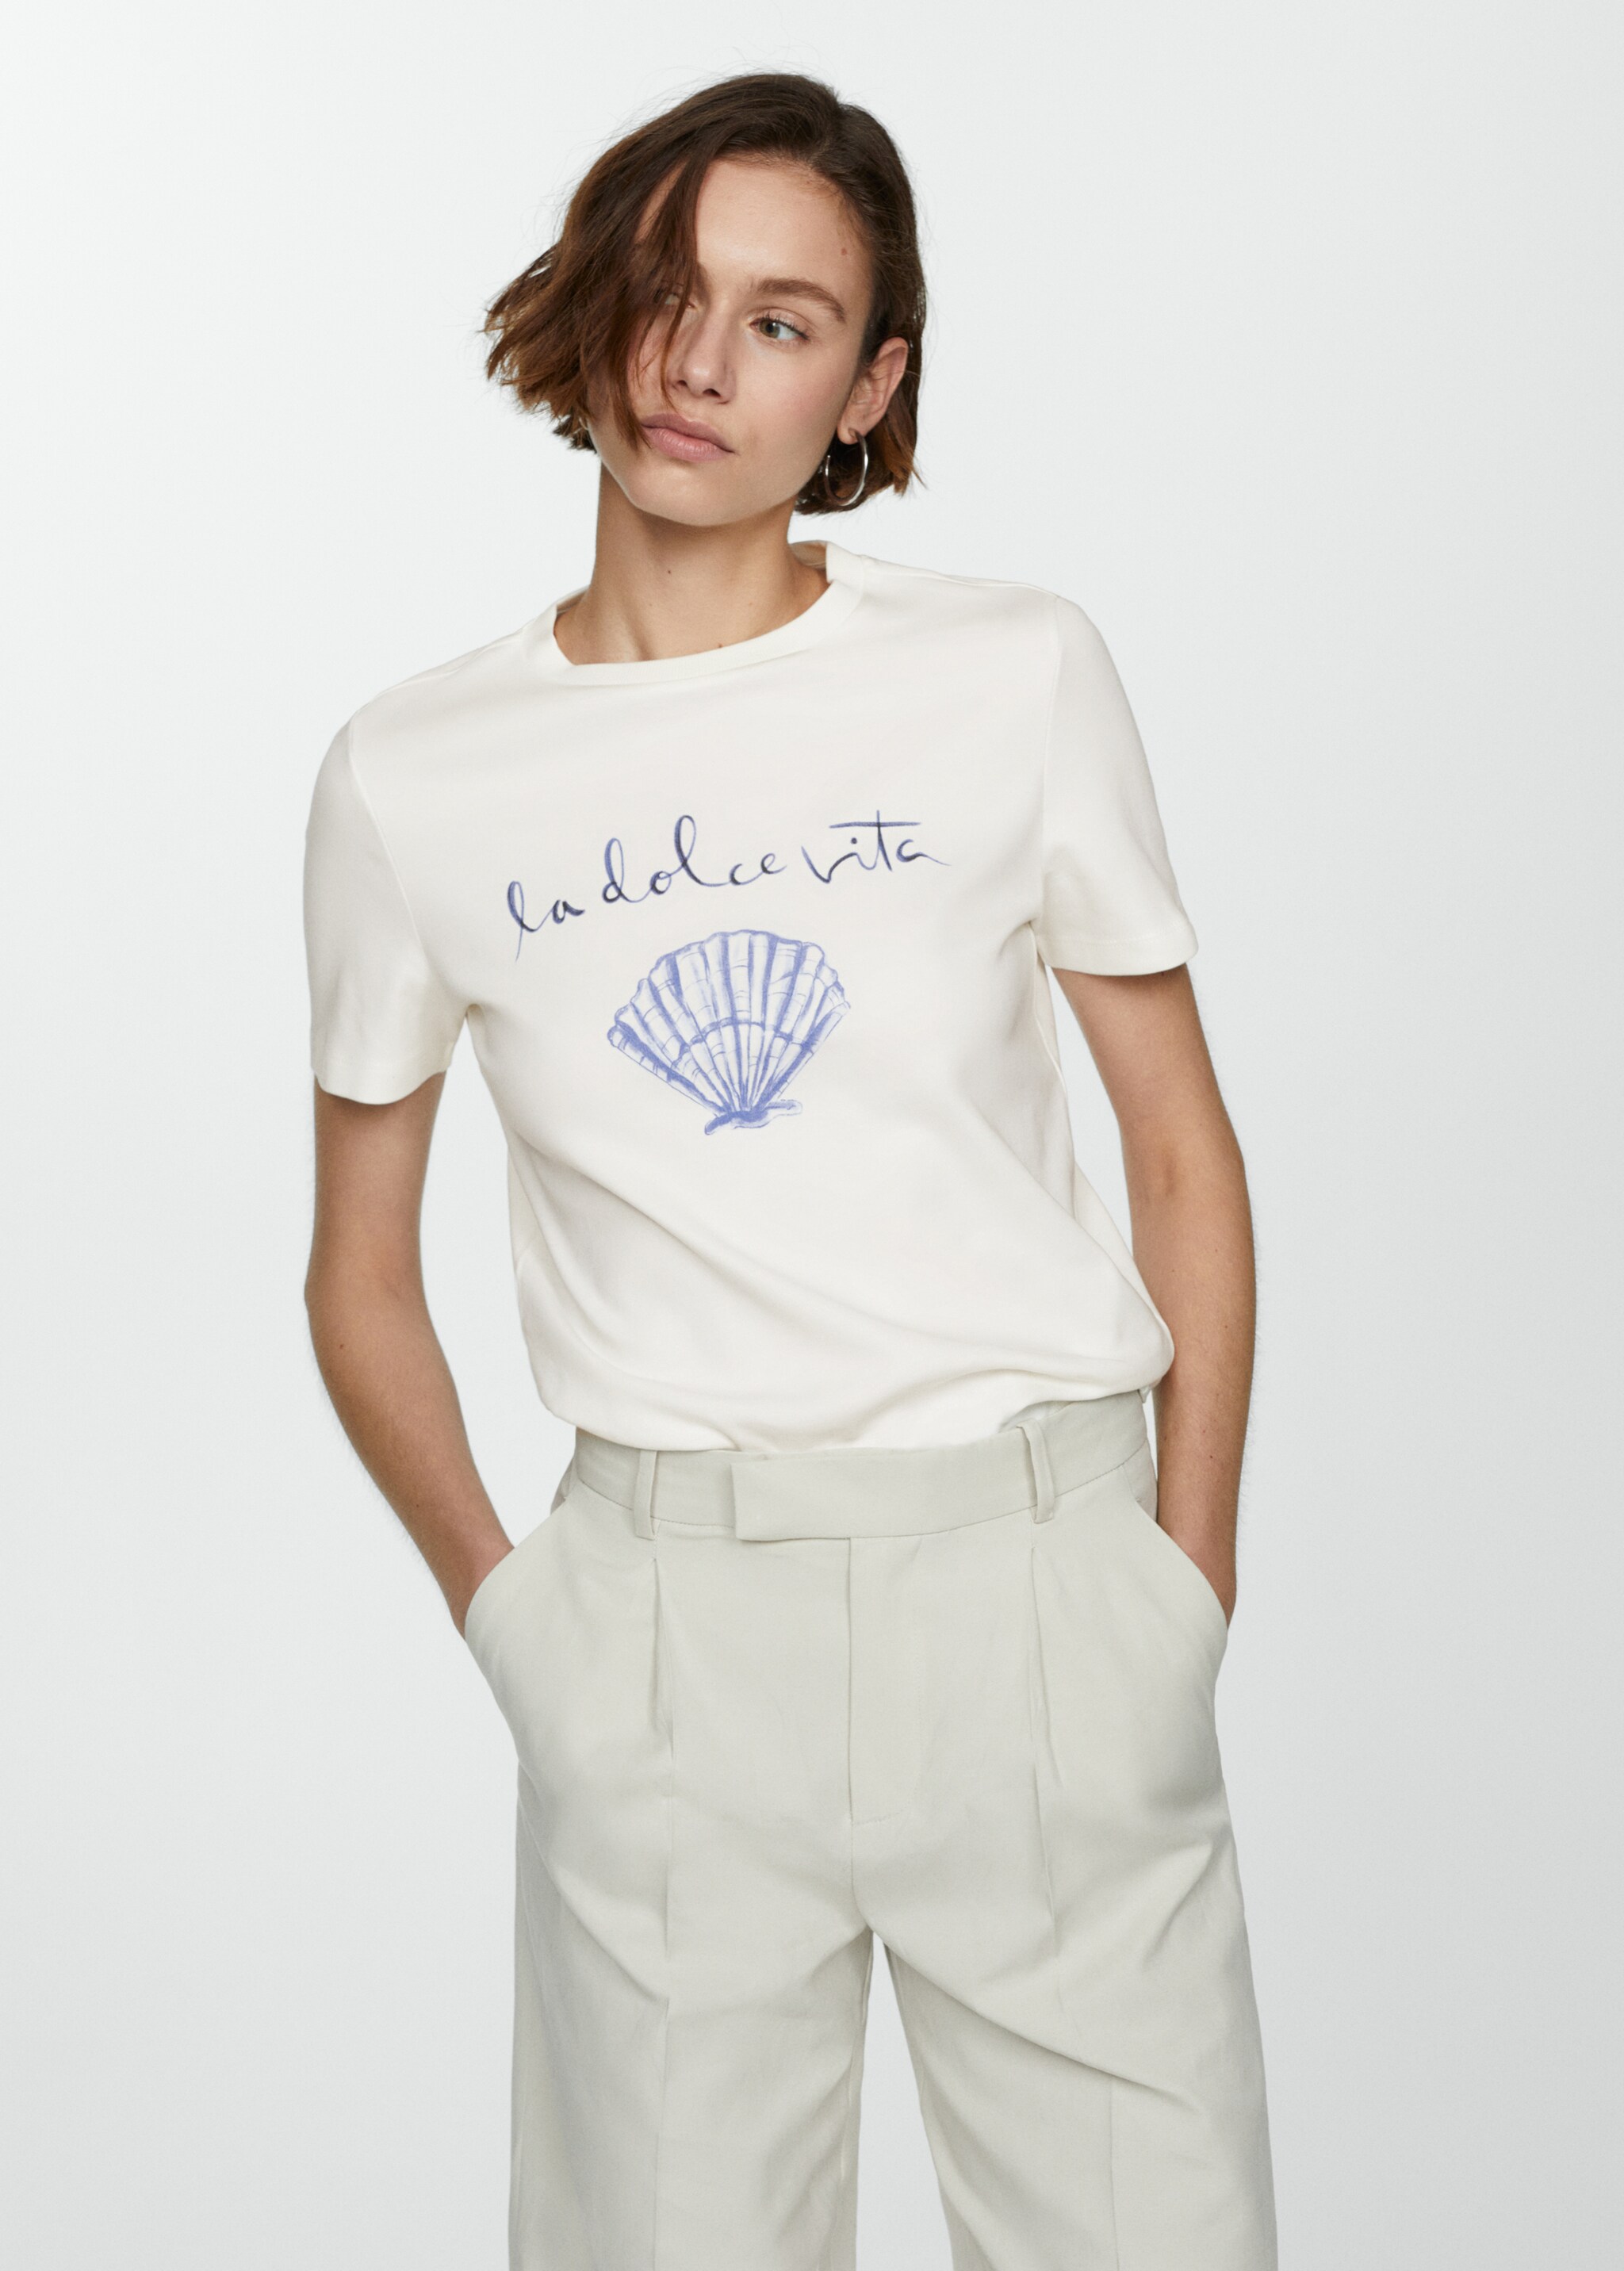 100% cotton t-shirt with printed message - Medium plane